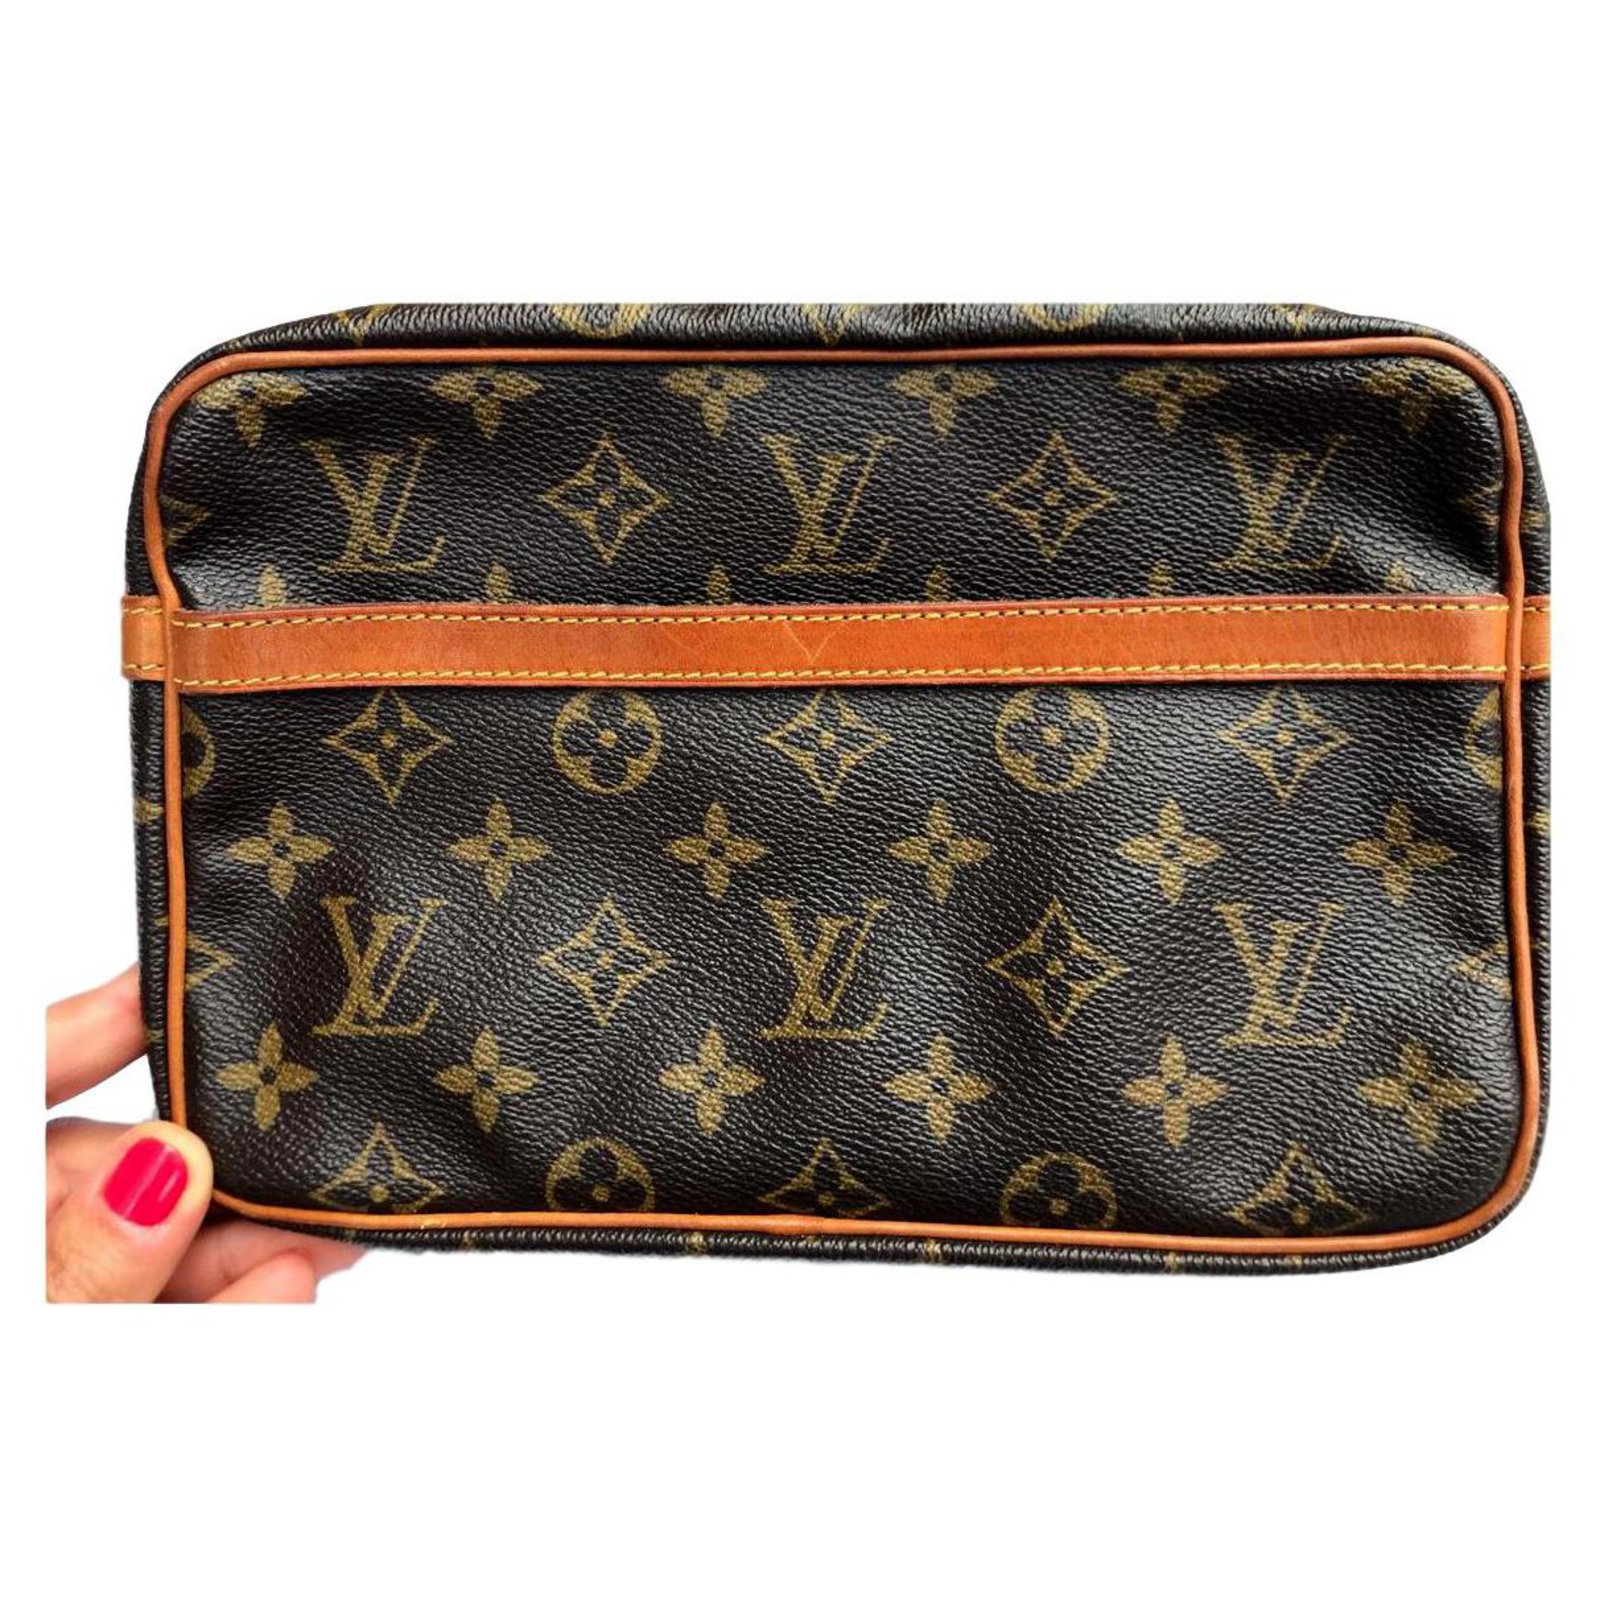 Louis Vuitton monogram compiegne 23 clutch converted to crossbody